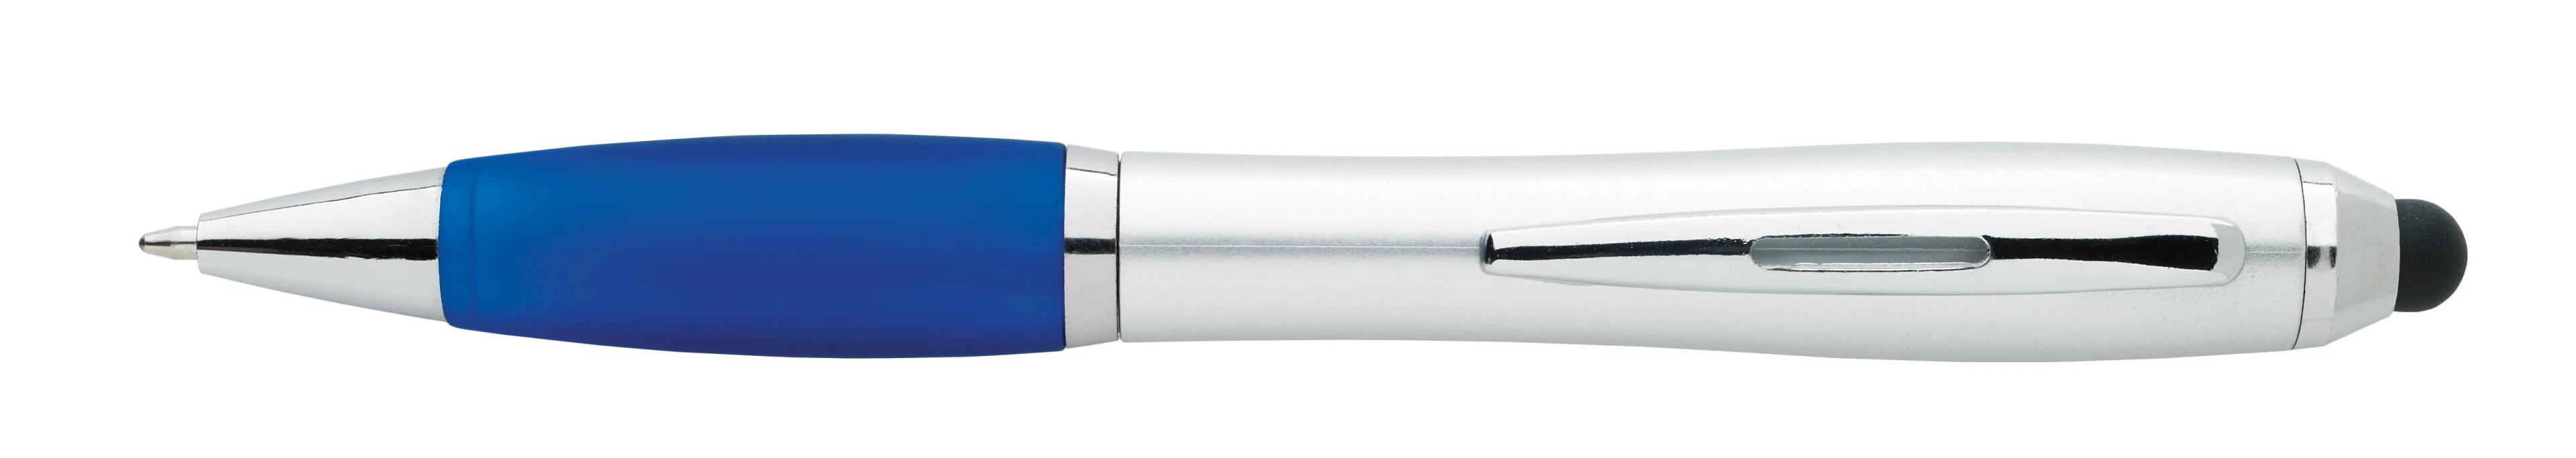 Ion Silver Stylus Pen 2 of 17